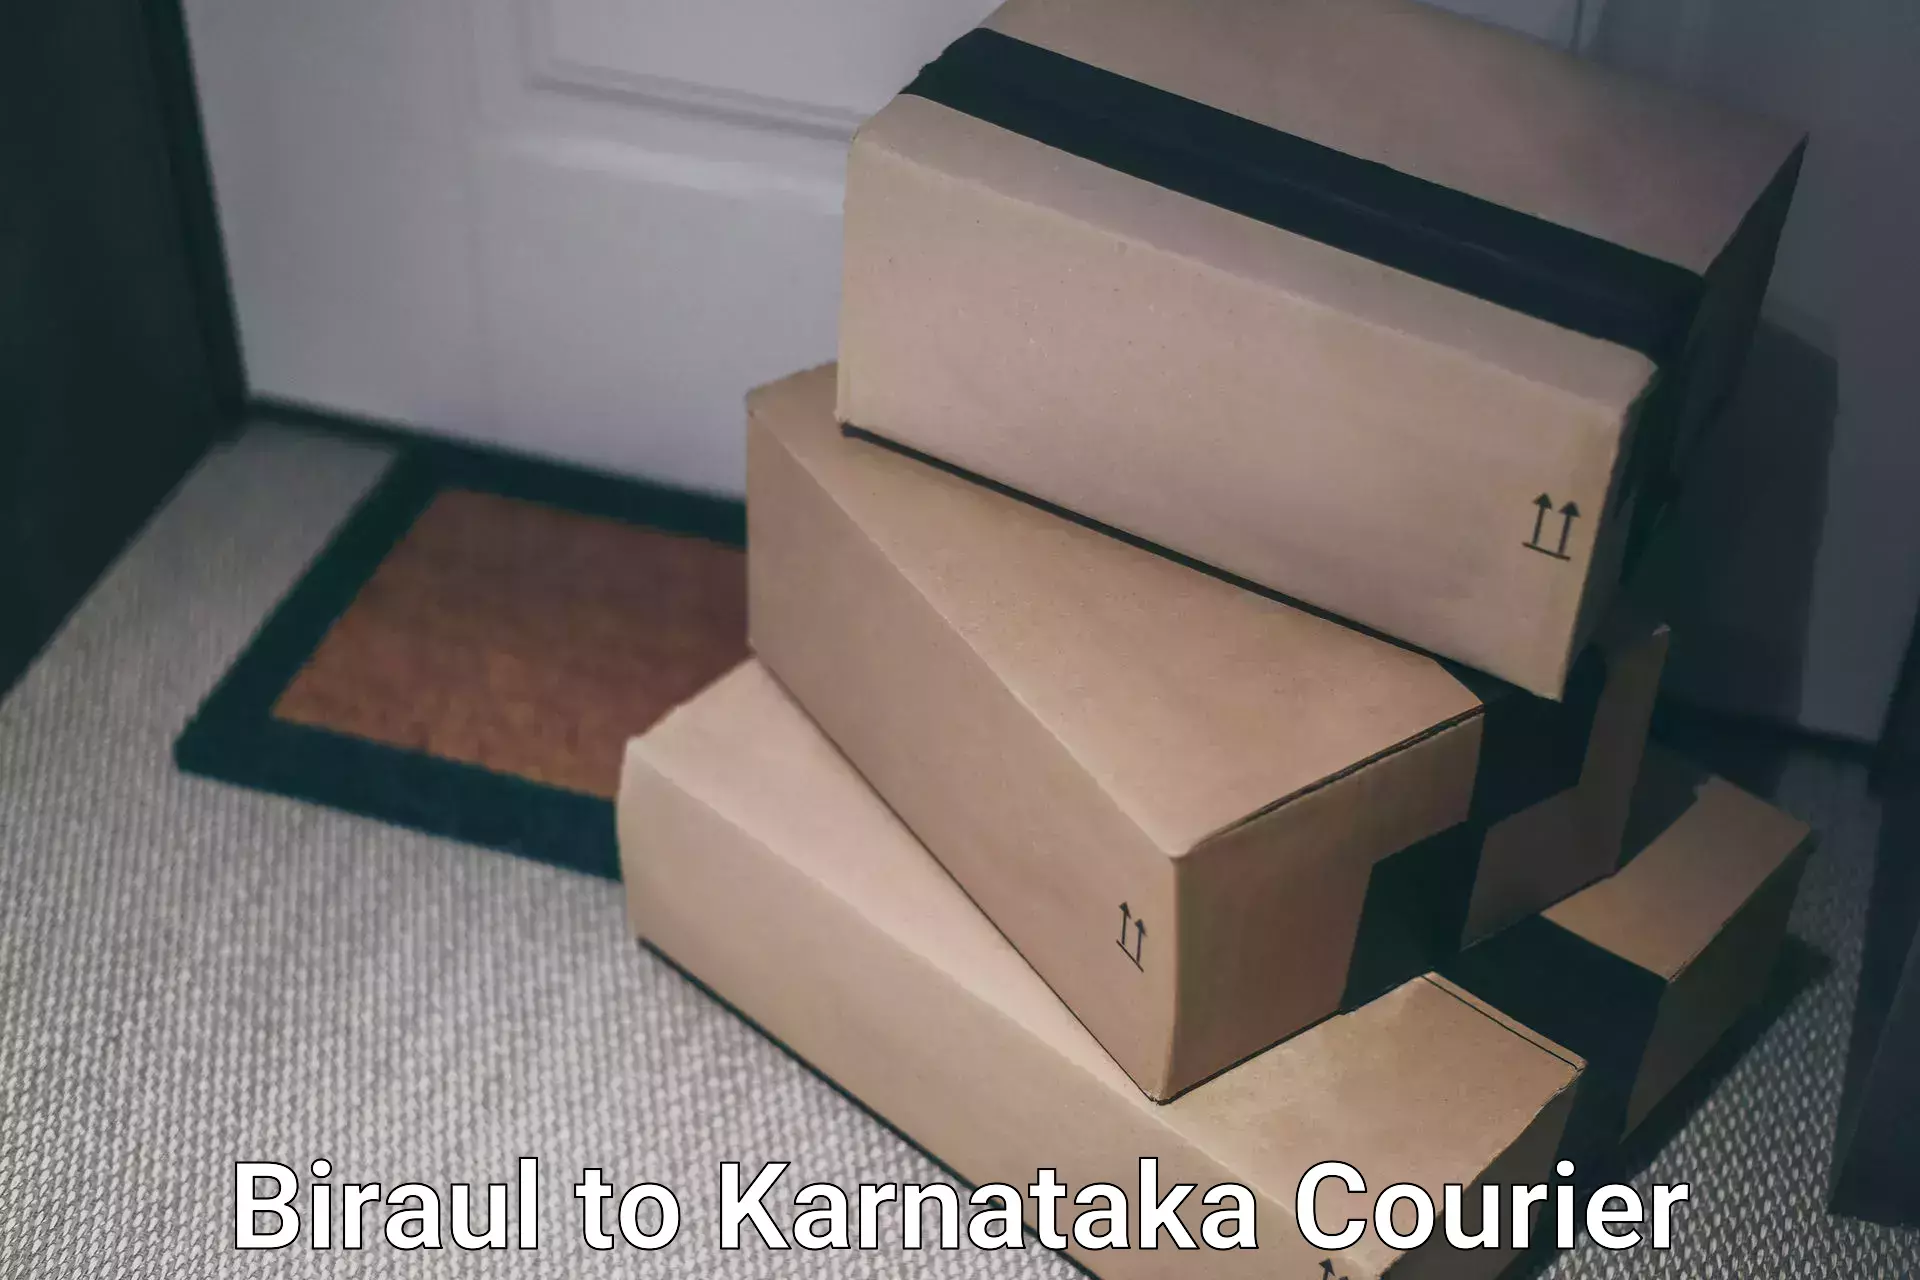 Courier service comparison Biraul to Kanakapura